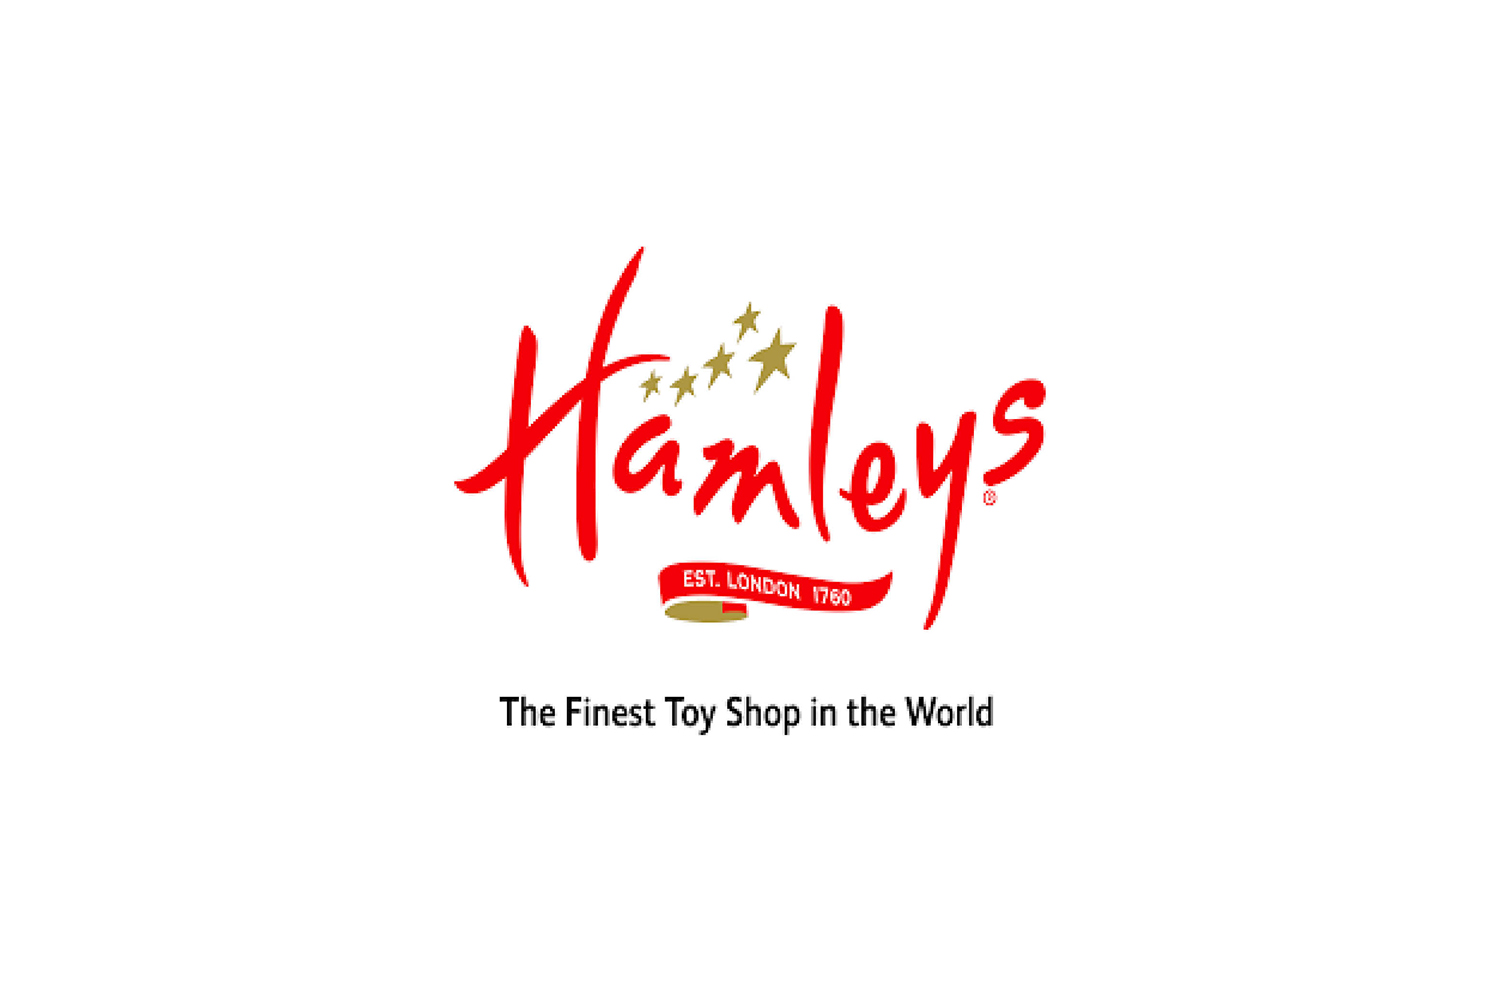 Boss_Display_Client_Hamleys_Toy_Shop_Logo.jpg